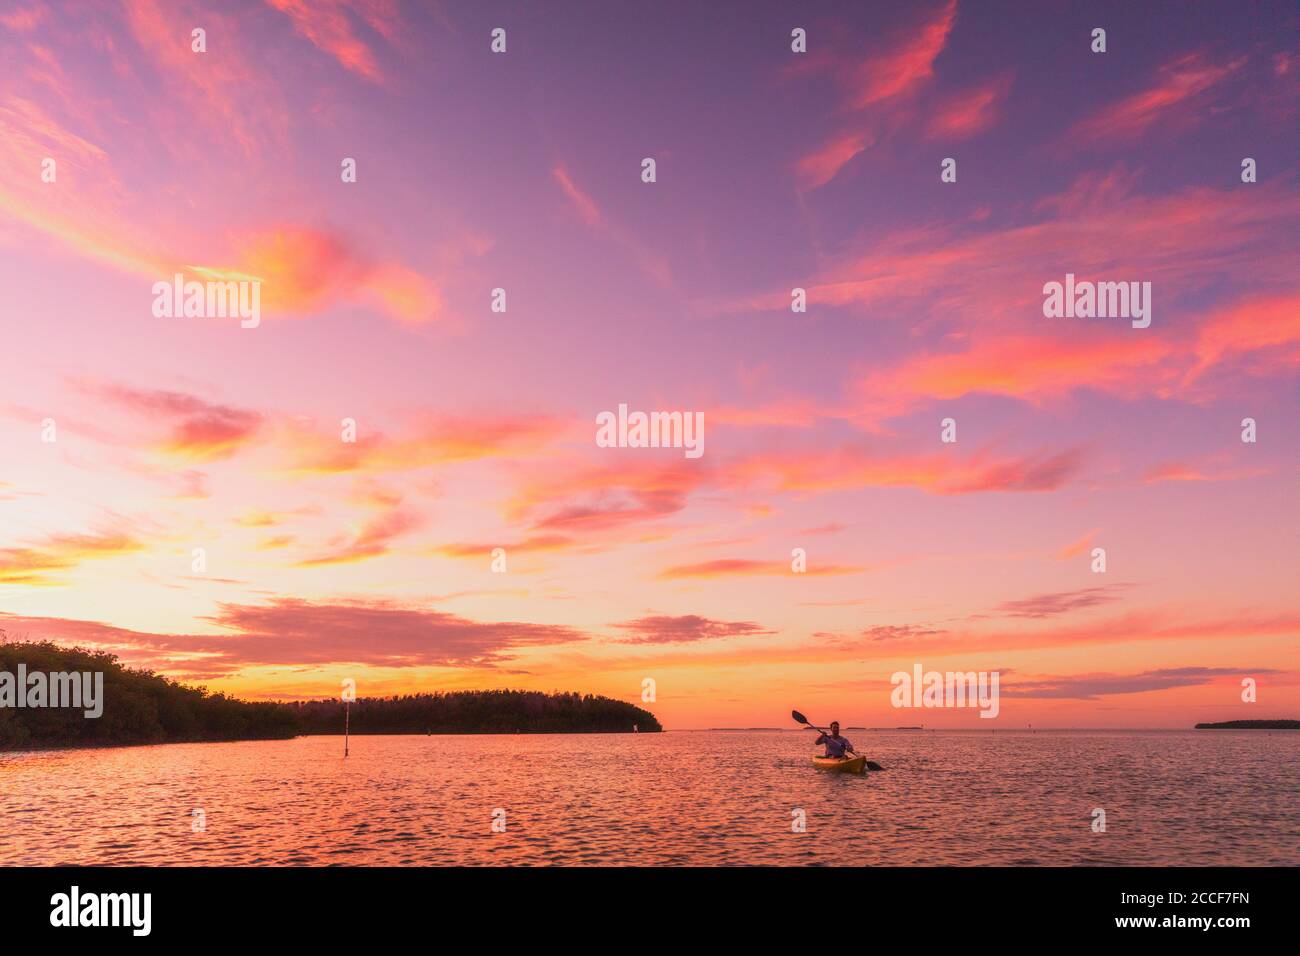 Kajakfahrer Mann Kajak Meer Kajak bei Sonnenuntergang auf Sommer Ozean Natur Landschaft. Atemberaubende Landschaft mit rosa Himmel Stockfoto